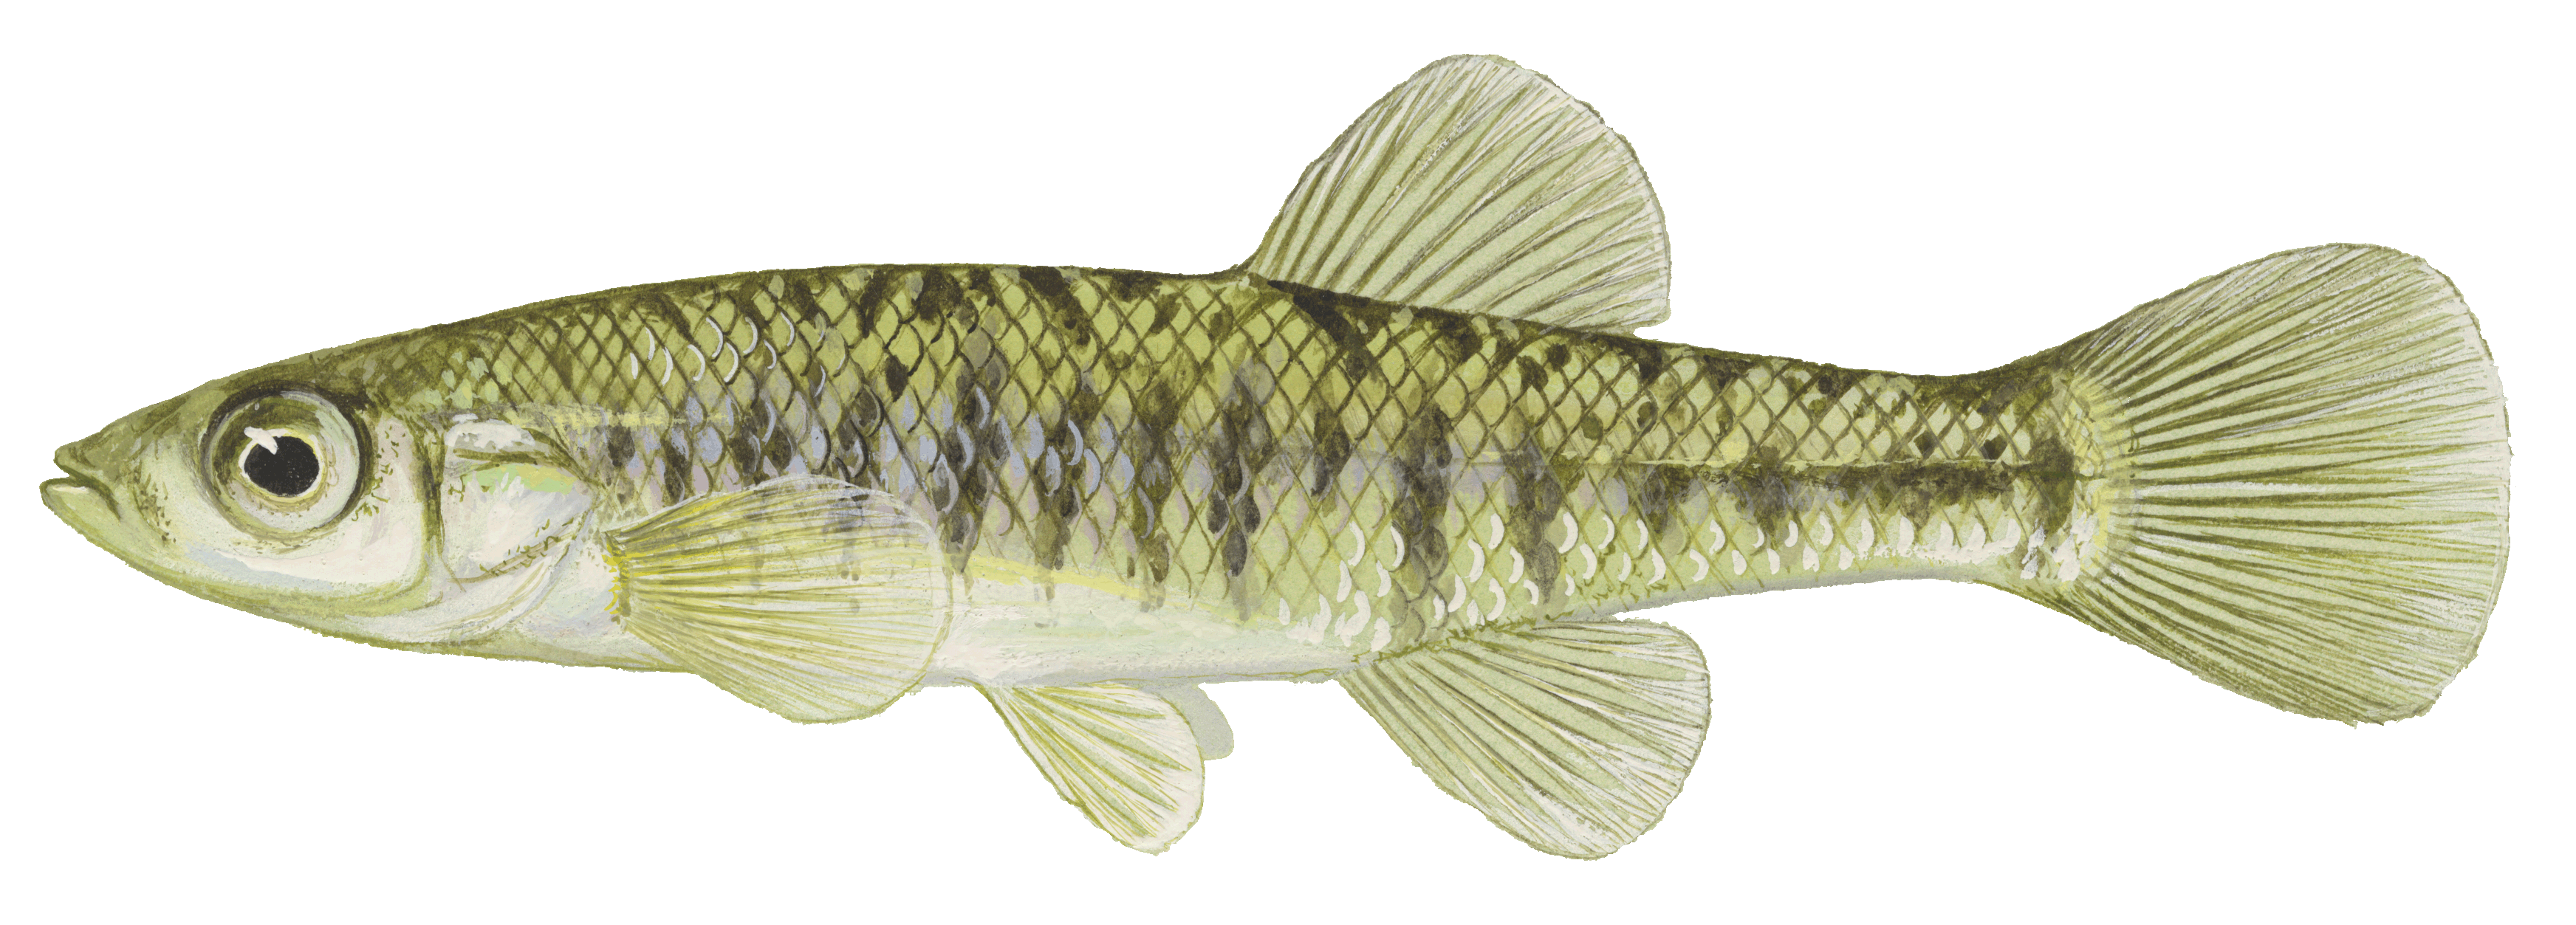 Banded Killifish, illustration by Maynard Reece, from Iowa Fish and Fishing.